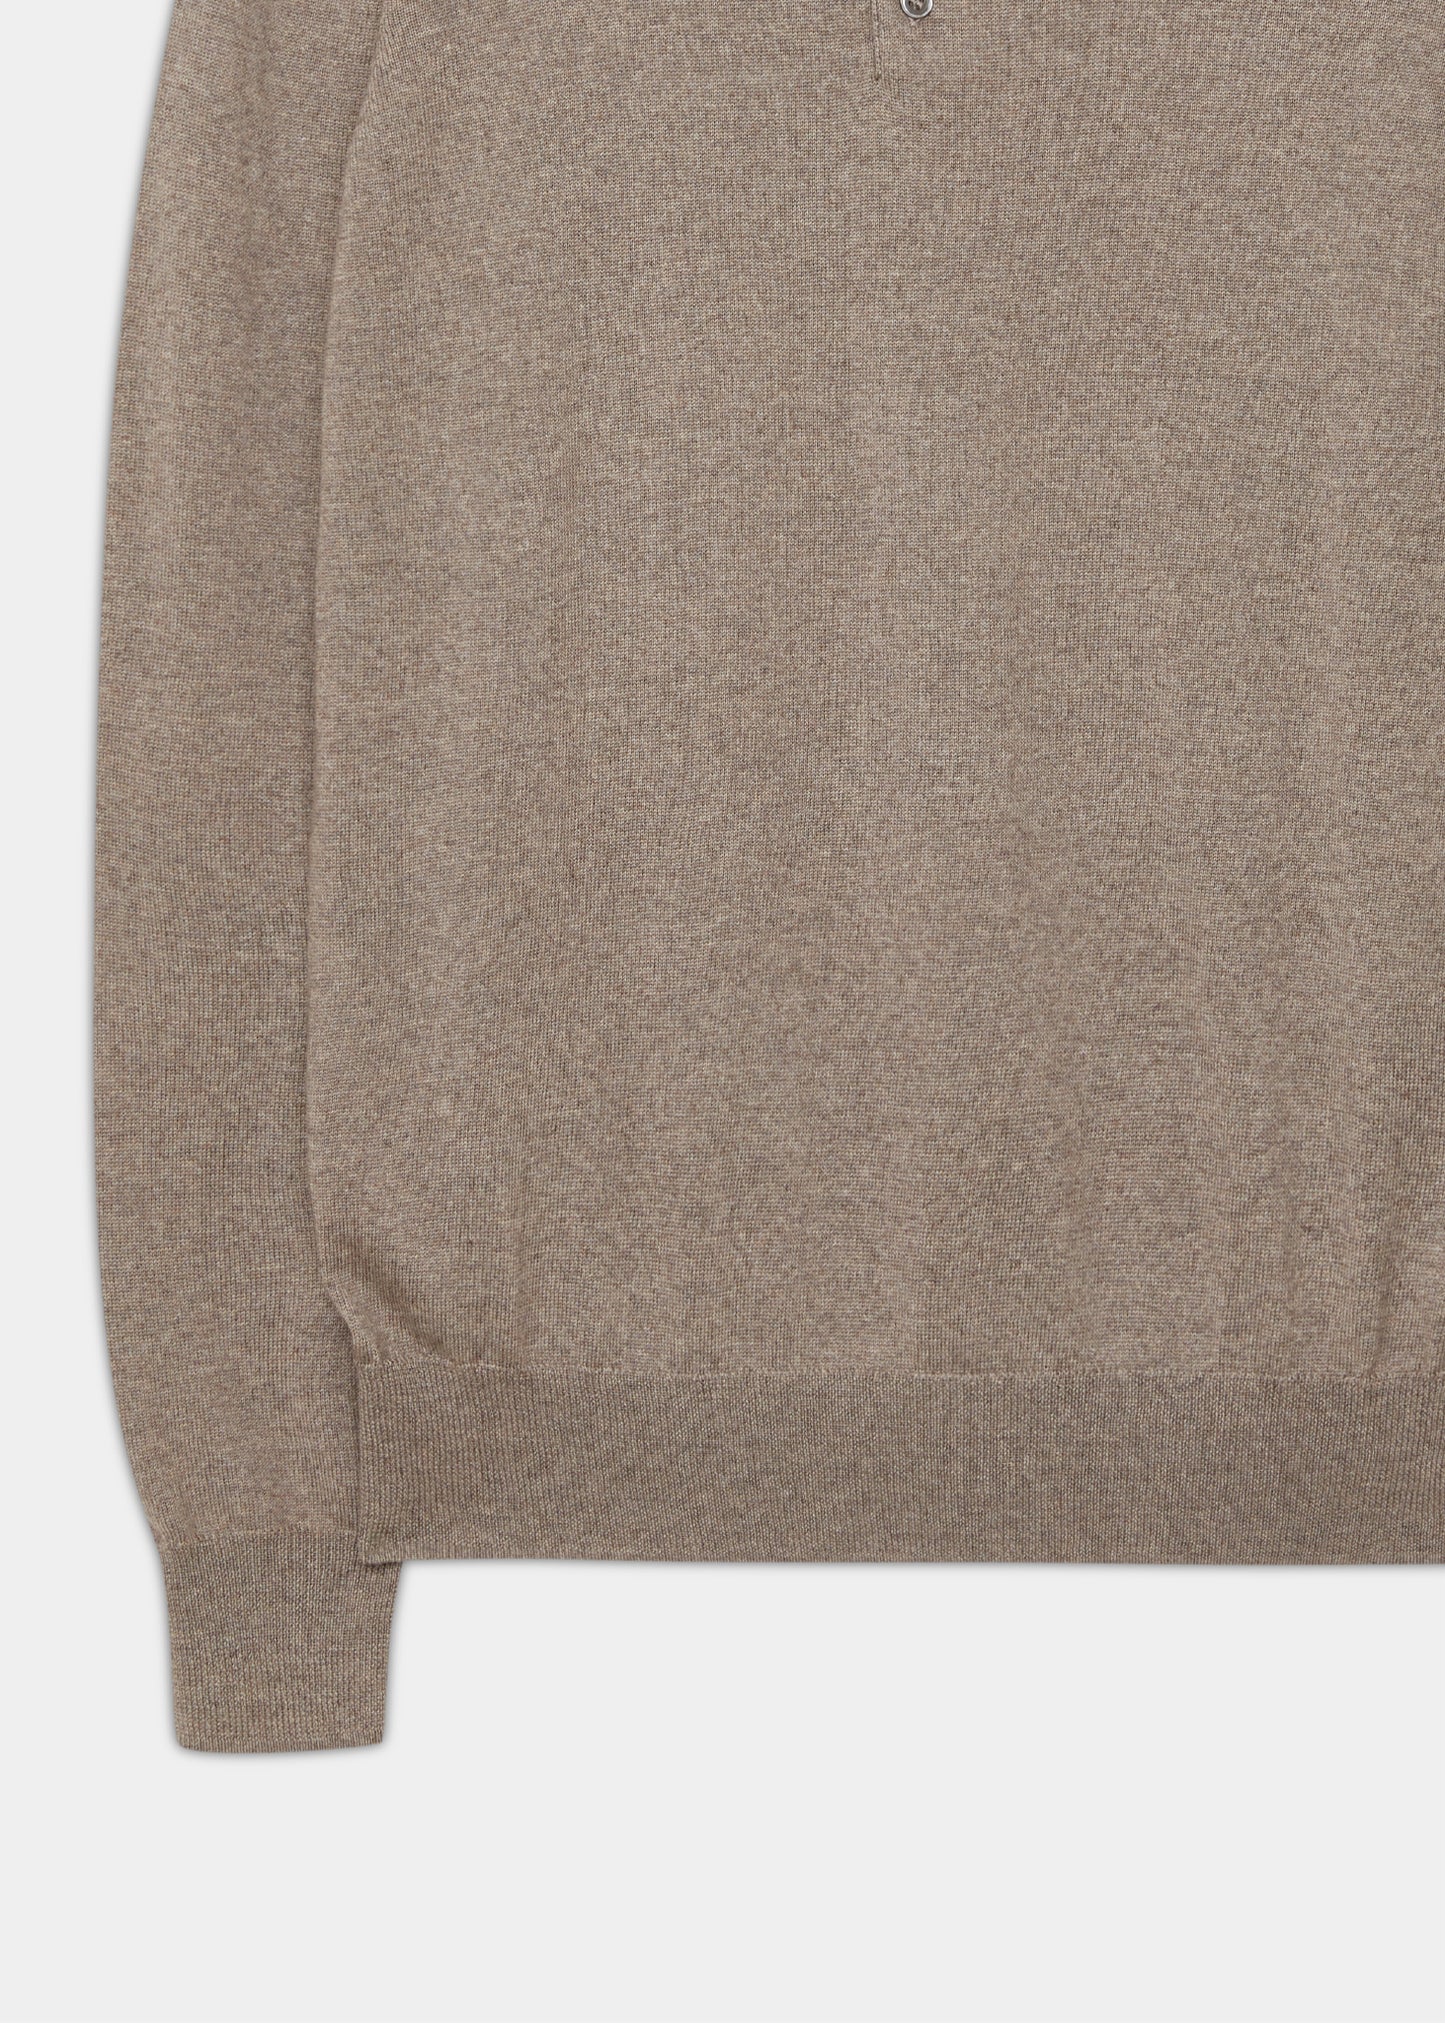 Hindhead Men's Merino Wool Polo Shirt in Mushroom - Regular Fit